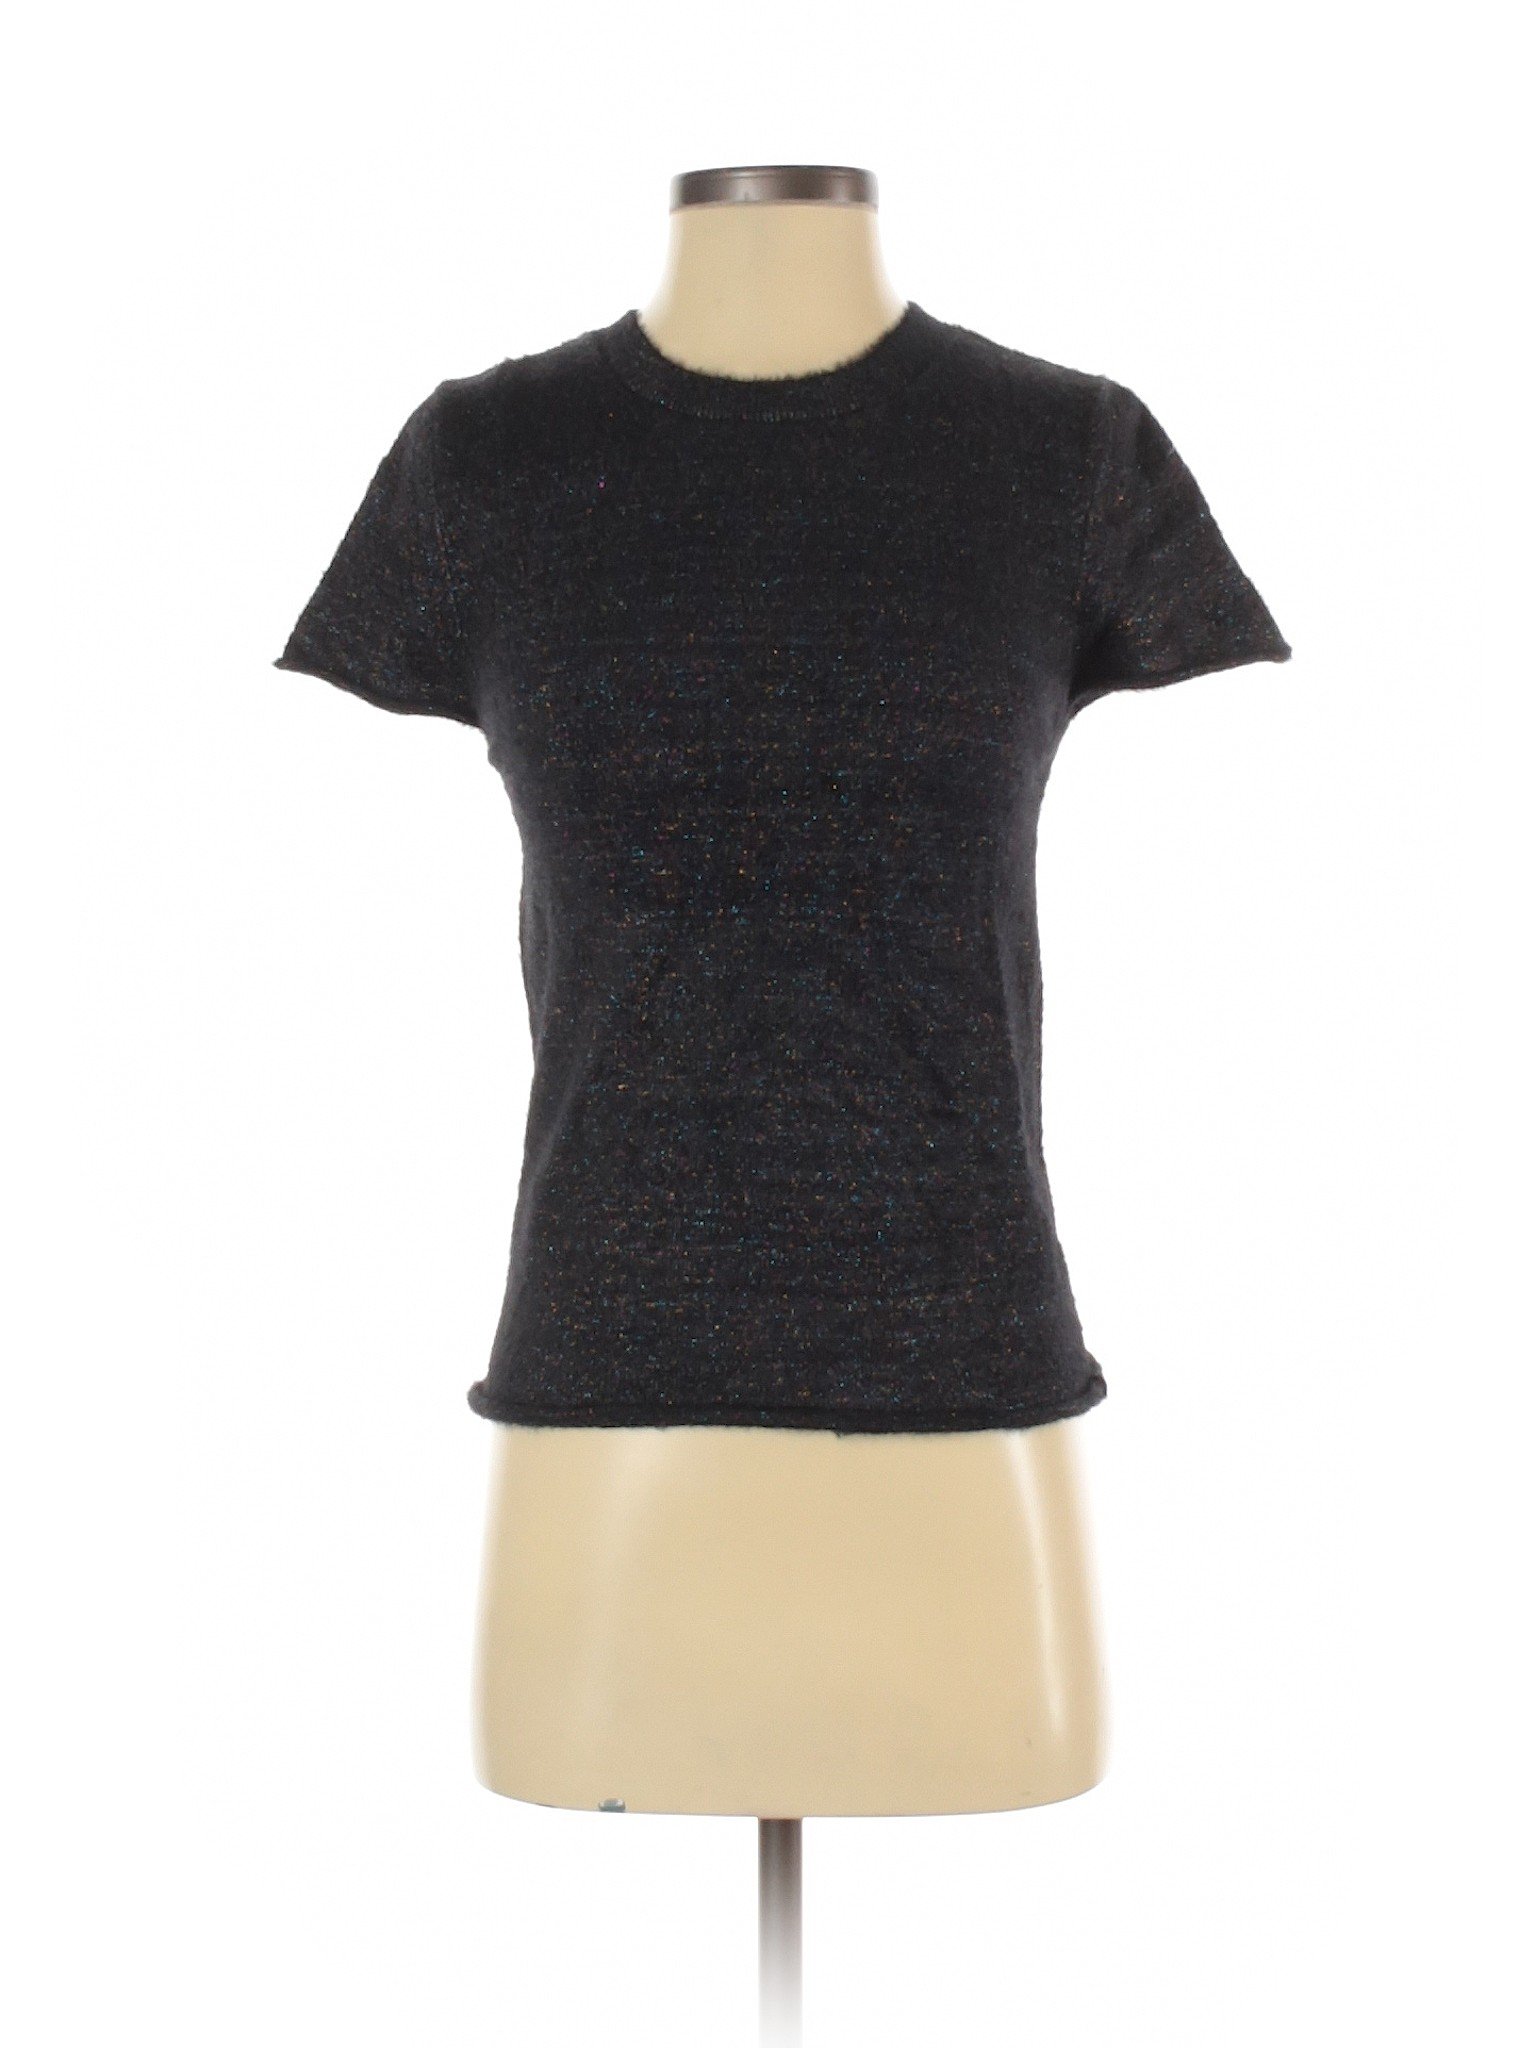 NWT Zara Women Black Pullover Sweater S | eBay